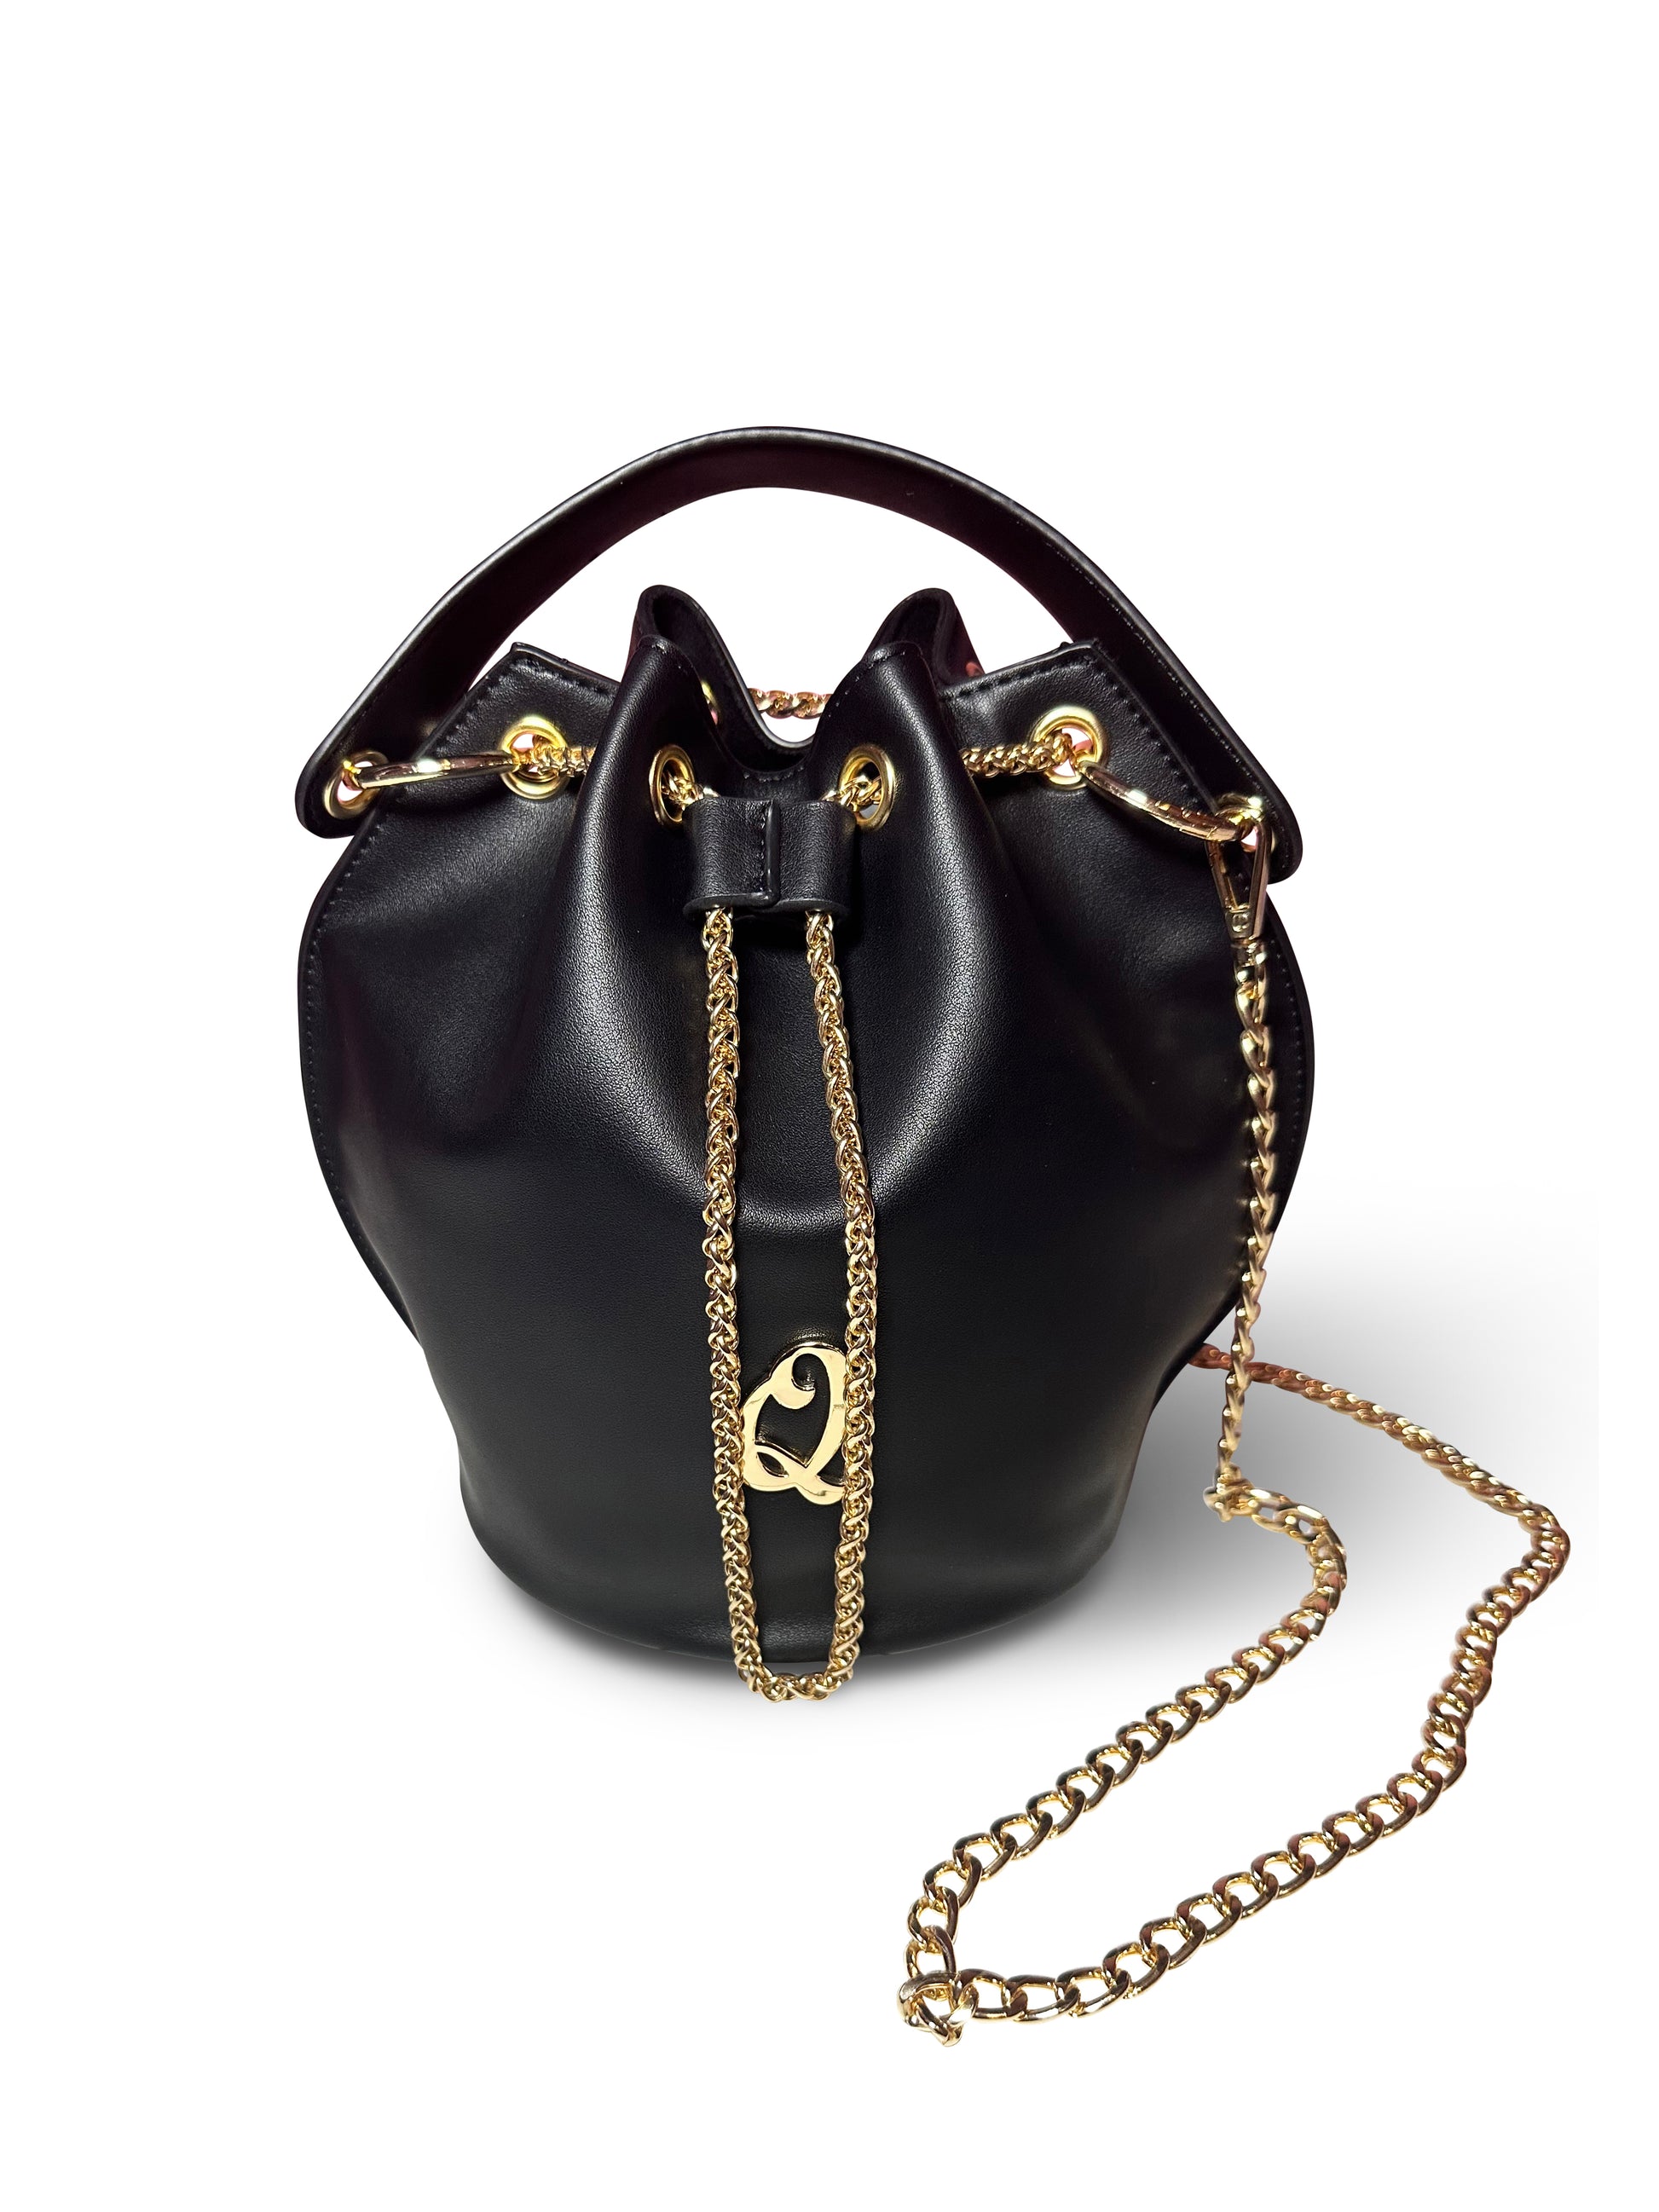 Chanel Small Bucket Bag Black